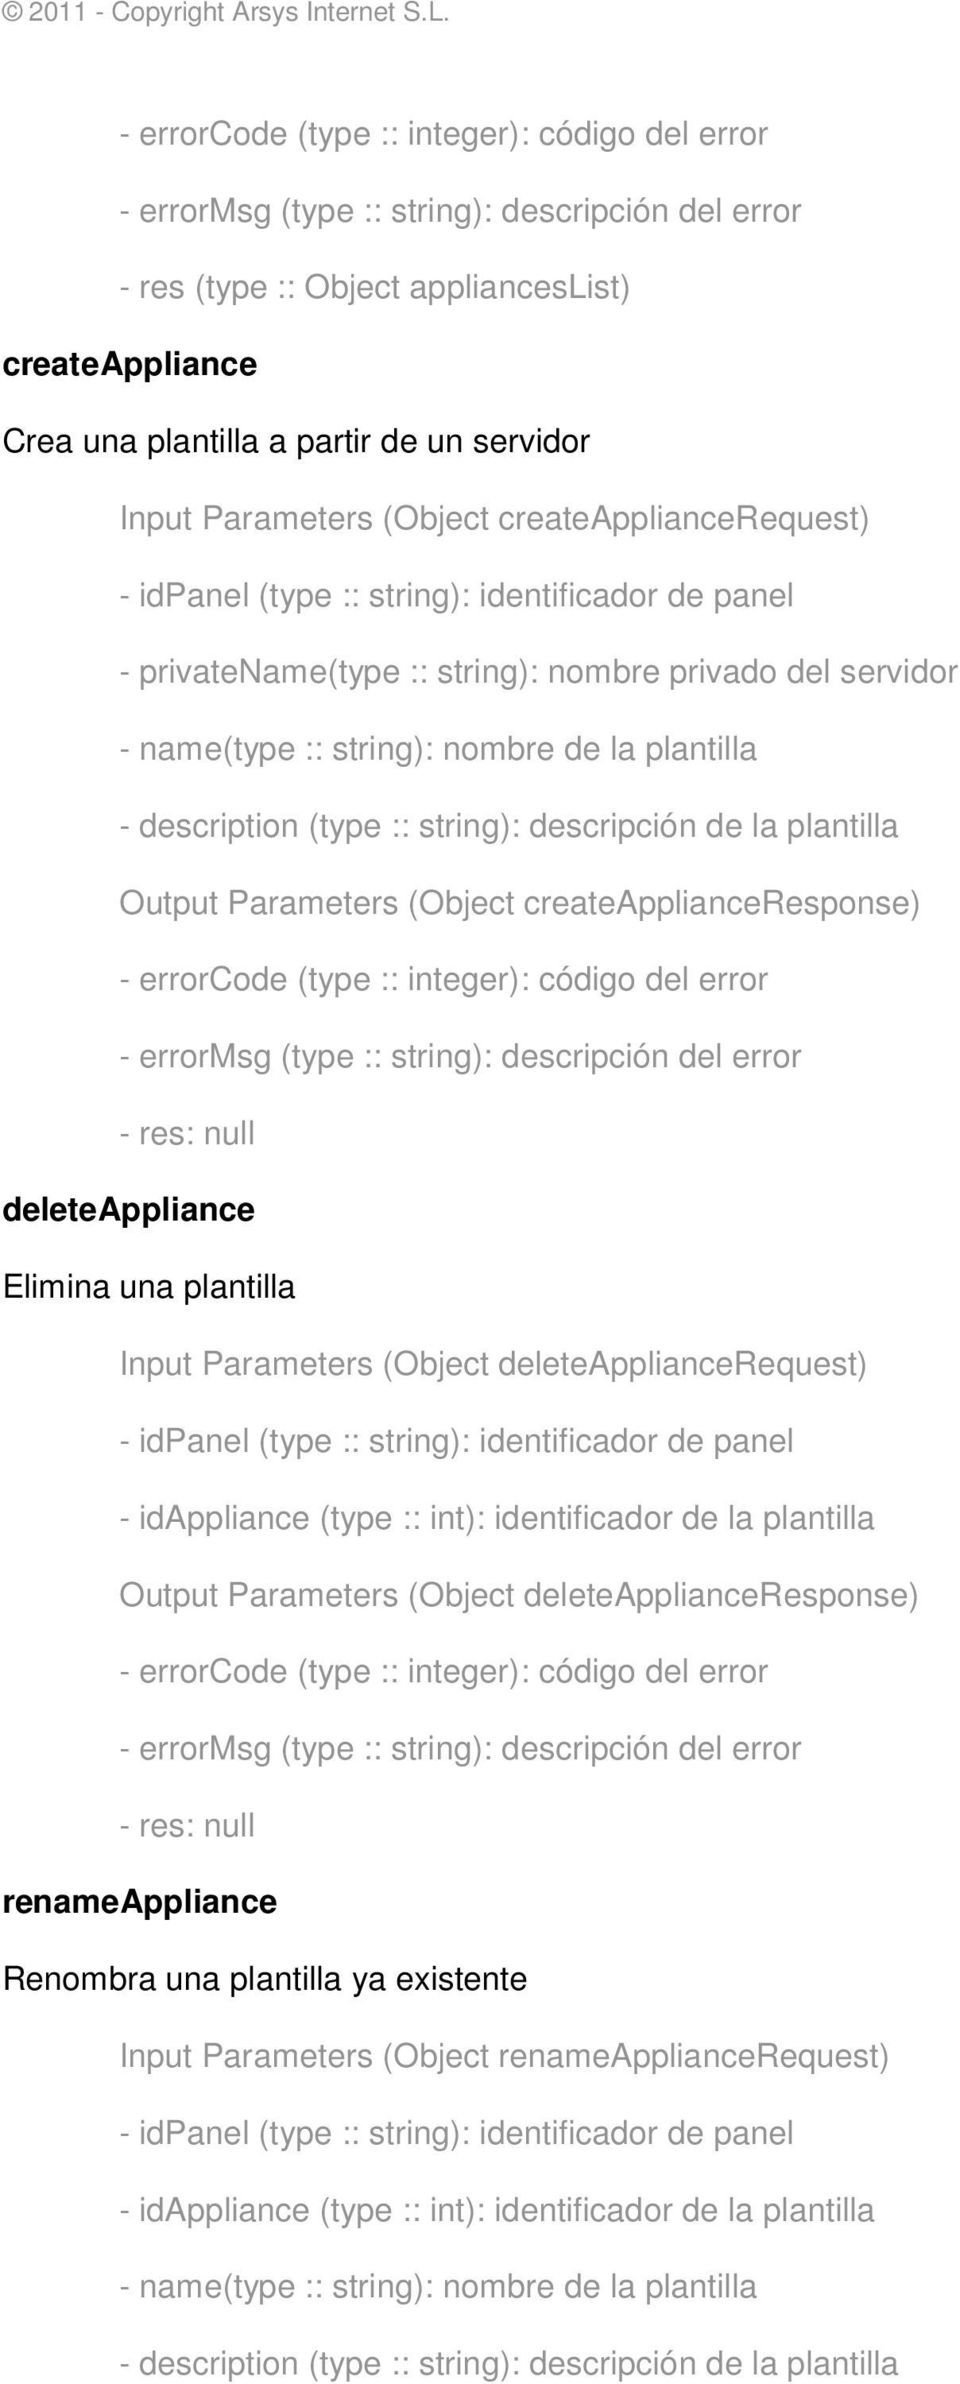 Elimina una plantilla Input Parameters (Object deleteappliancerequest) - idappliance (type :: int): identificador de la plantilla Output Parameters (Object deleteapplianceresponse) - res: null